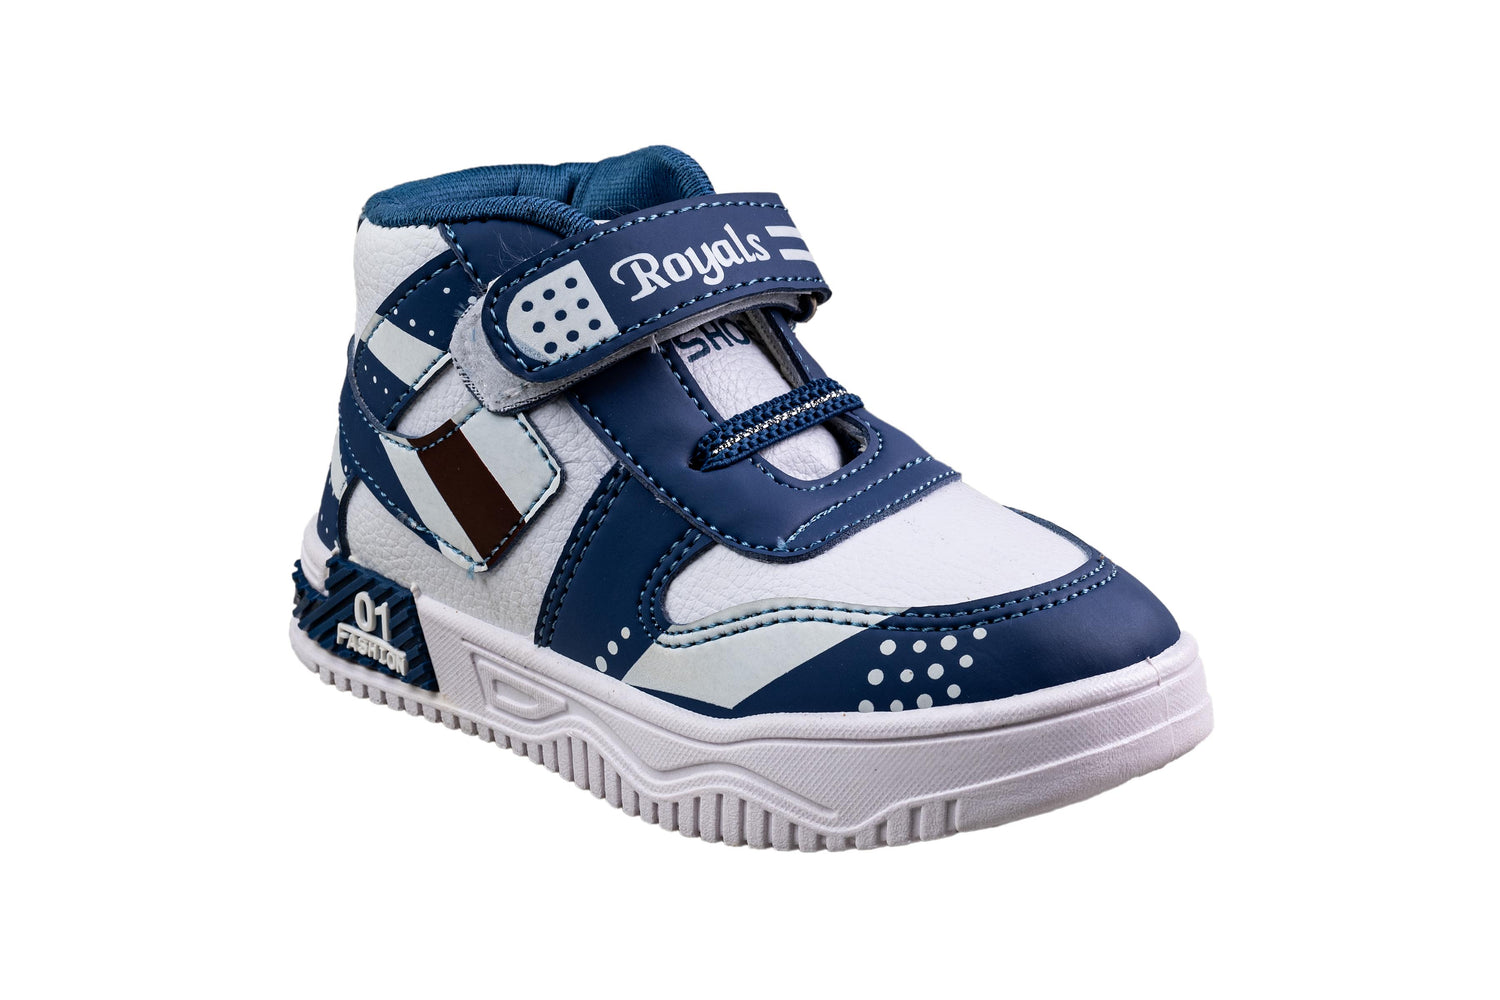 Rouba Air Force Children Sports Shoe